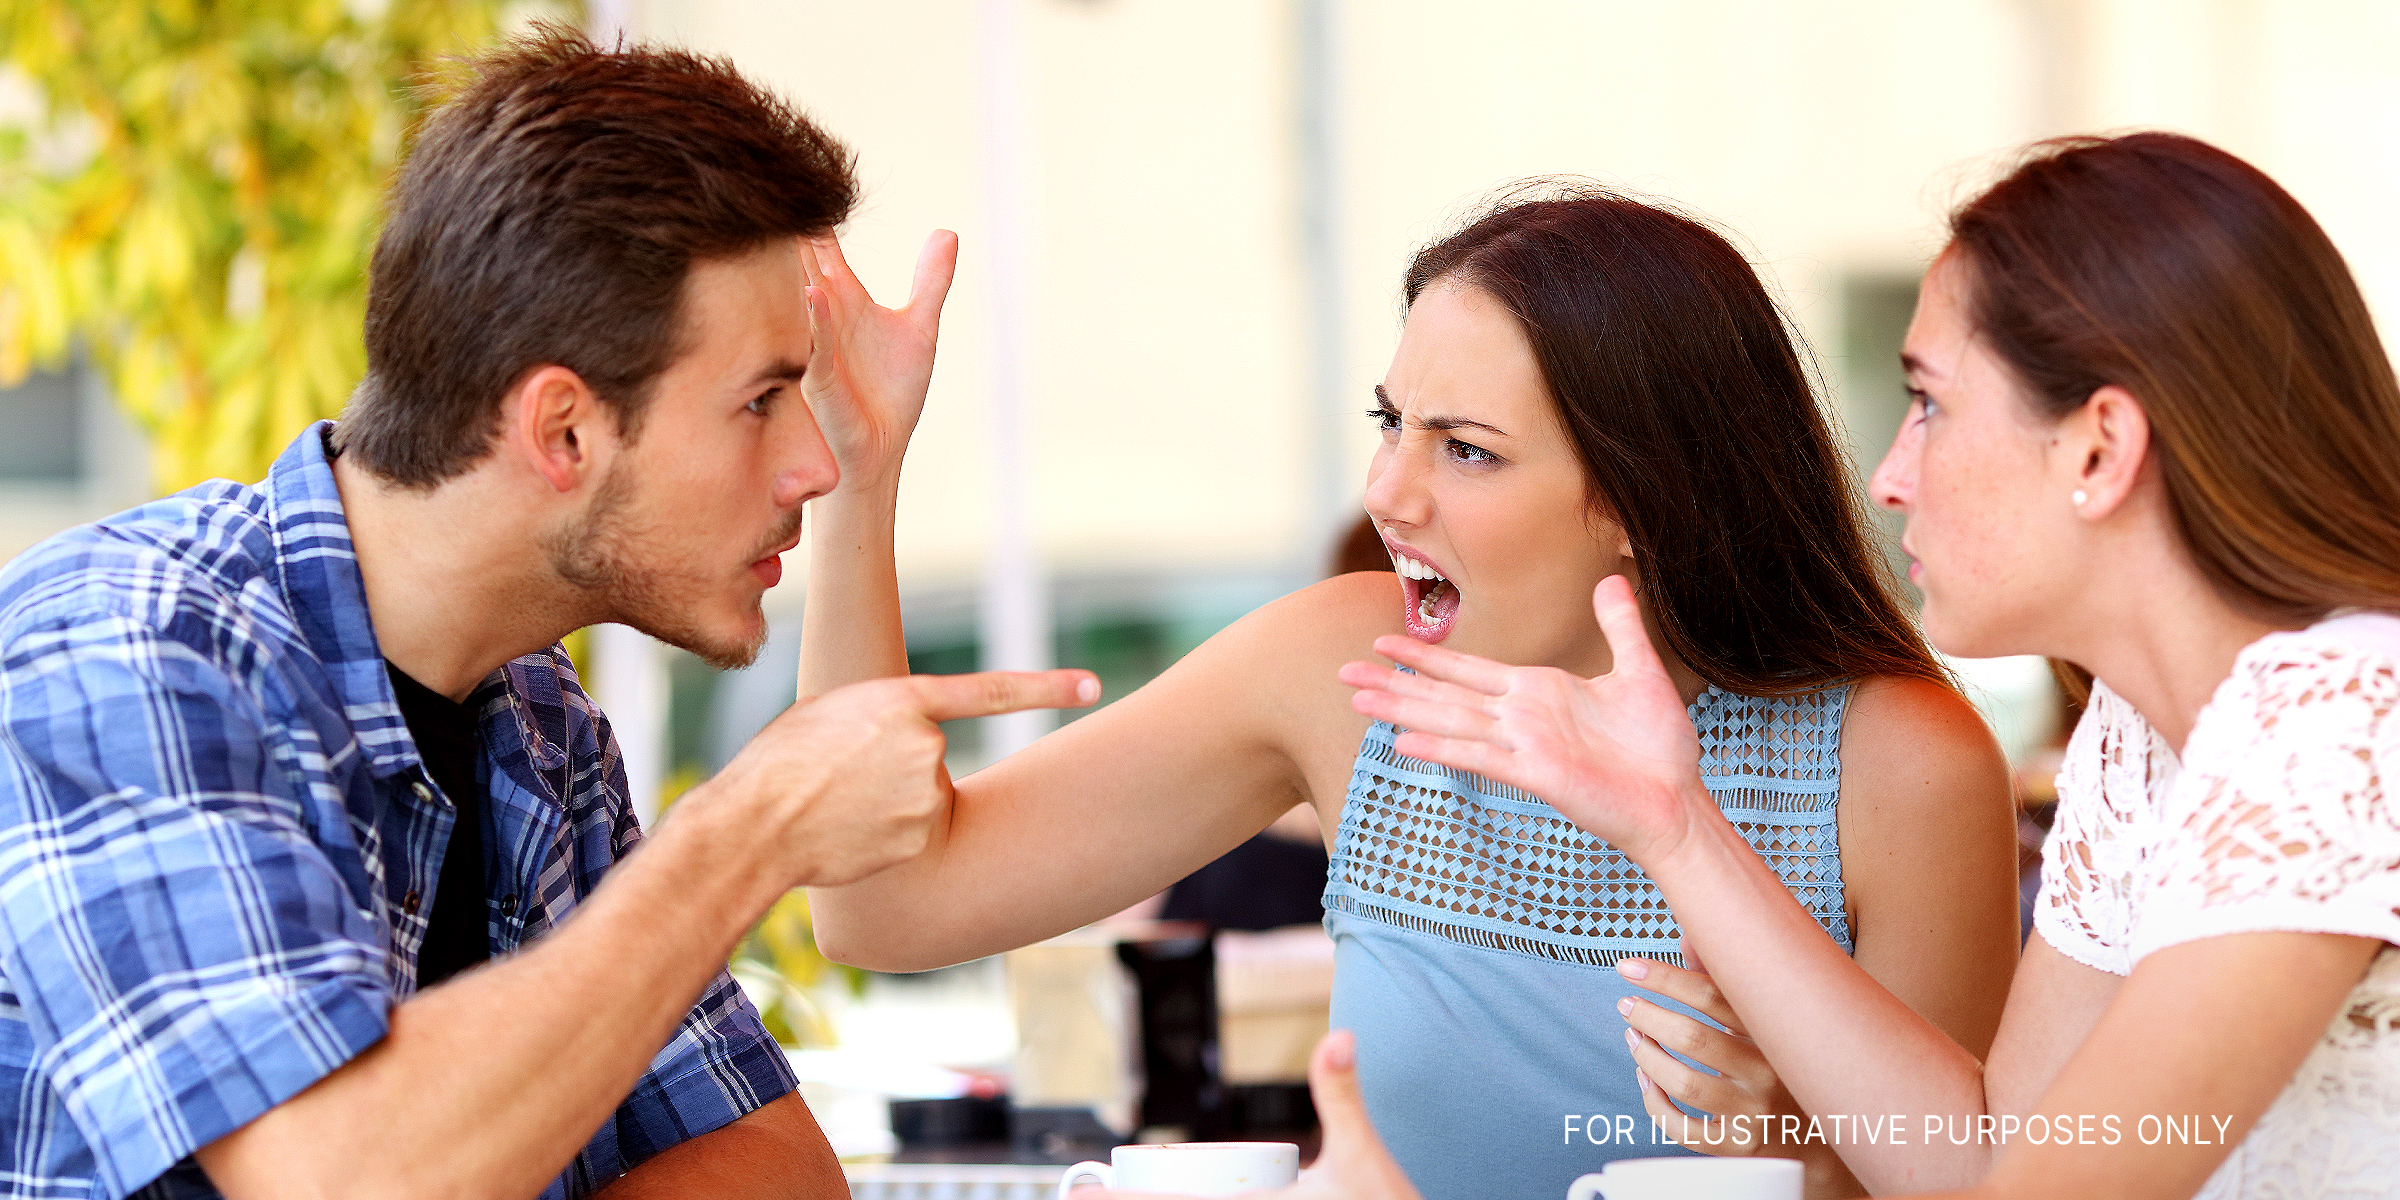 People arguing | Source: Shutterstock